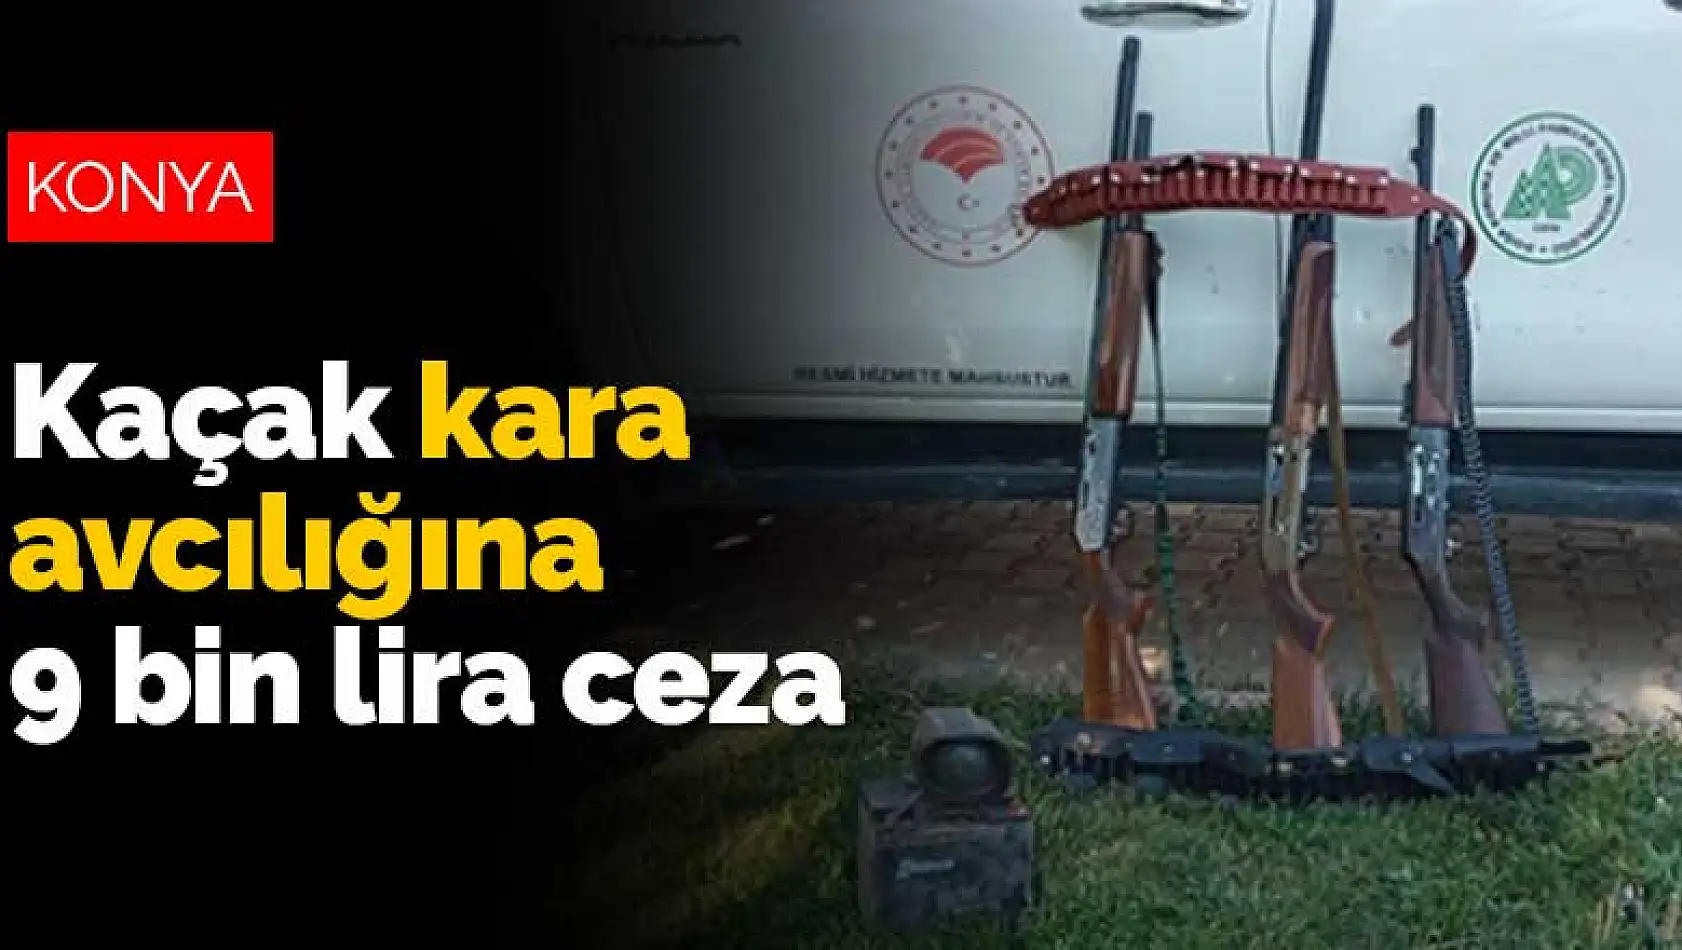 Konya'da kaçak kara avcılığına 9 bin lira ceza